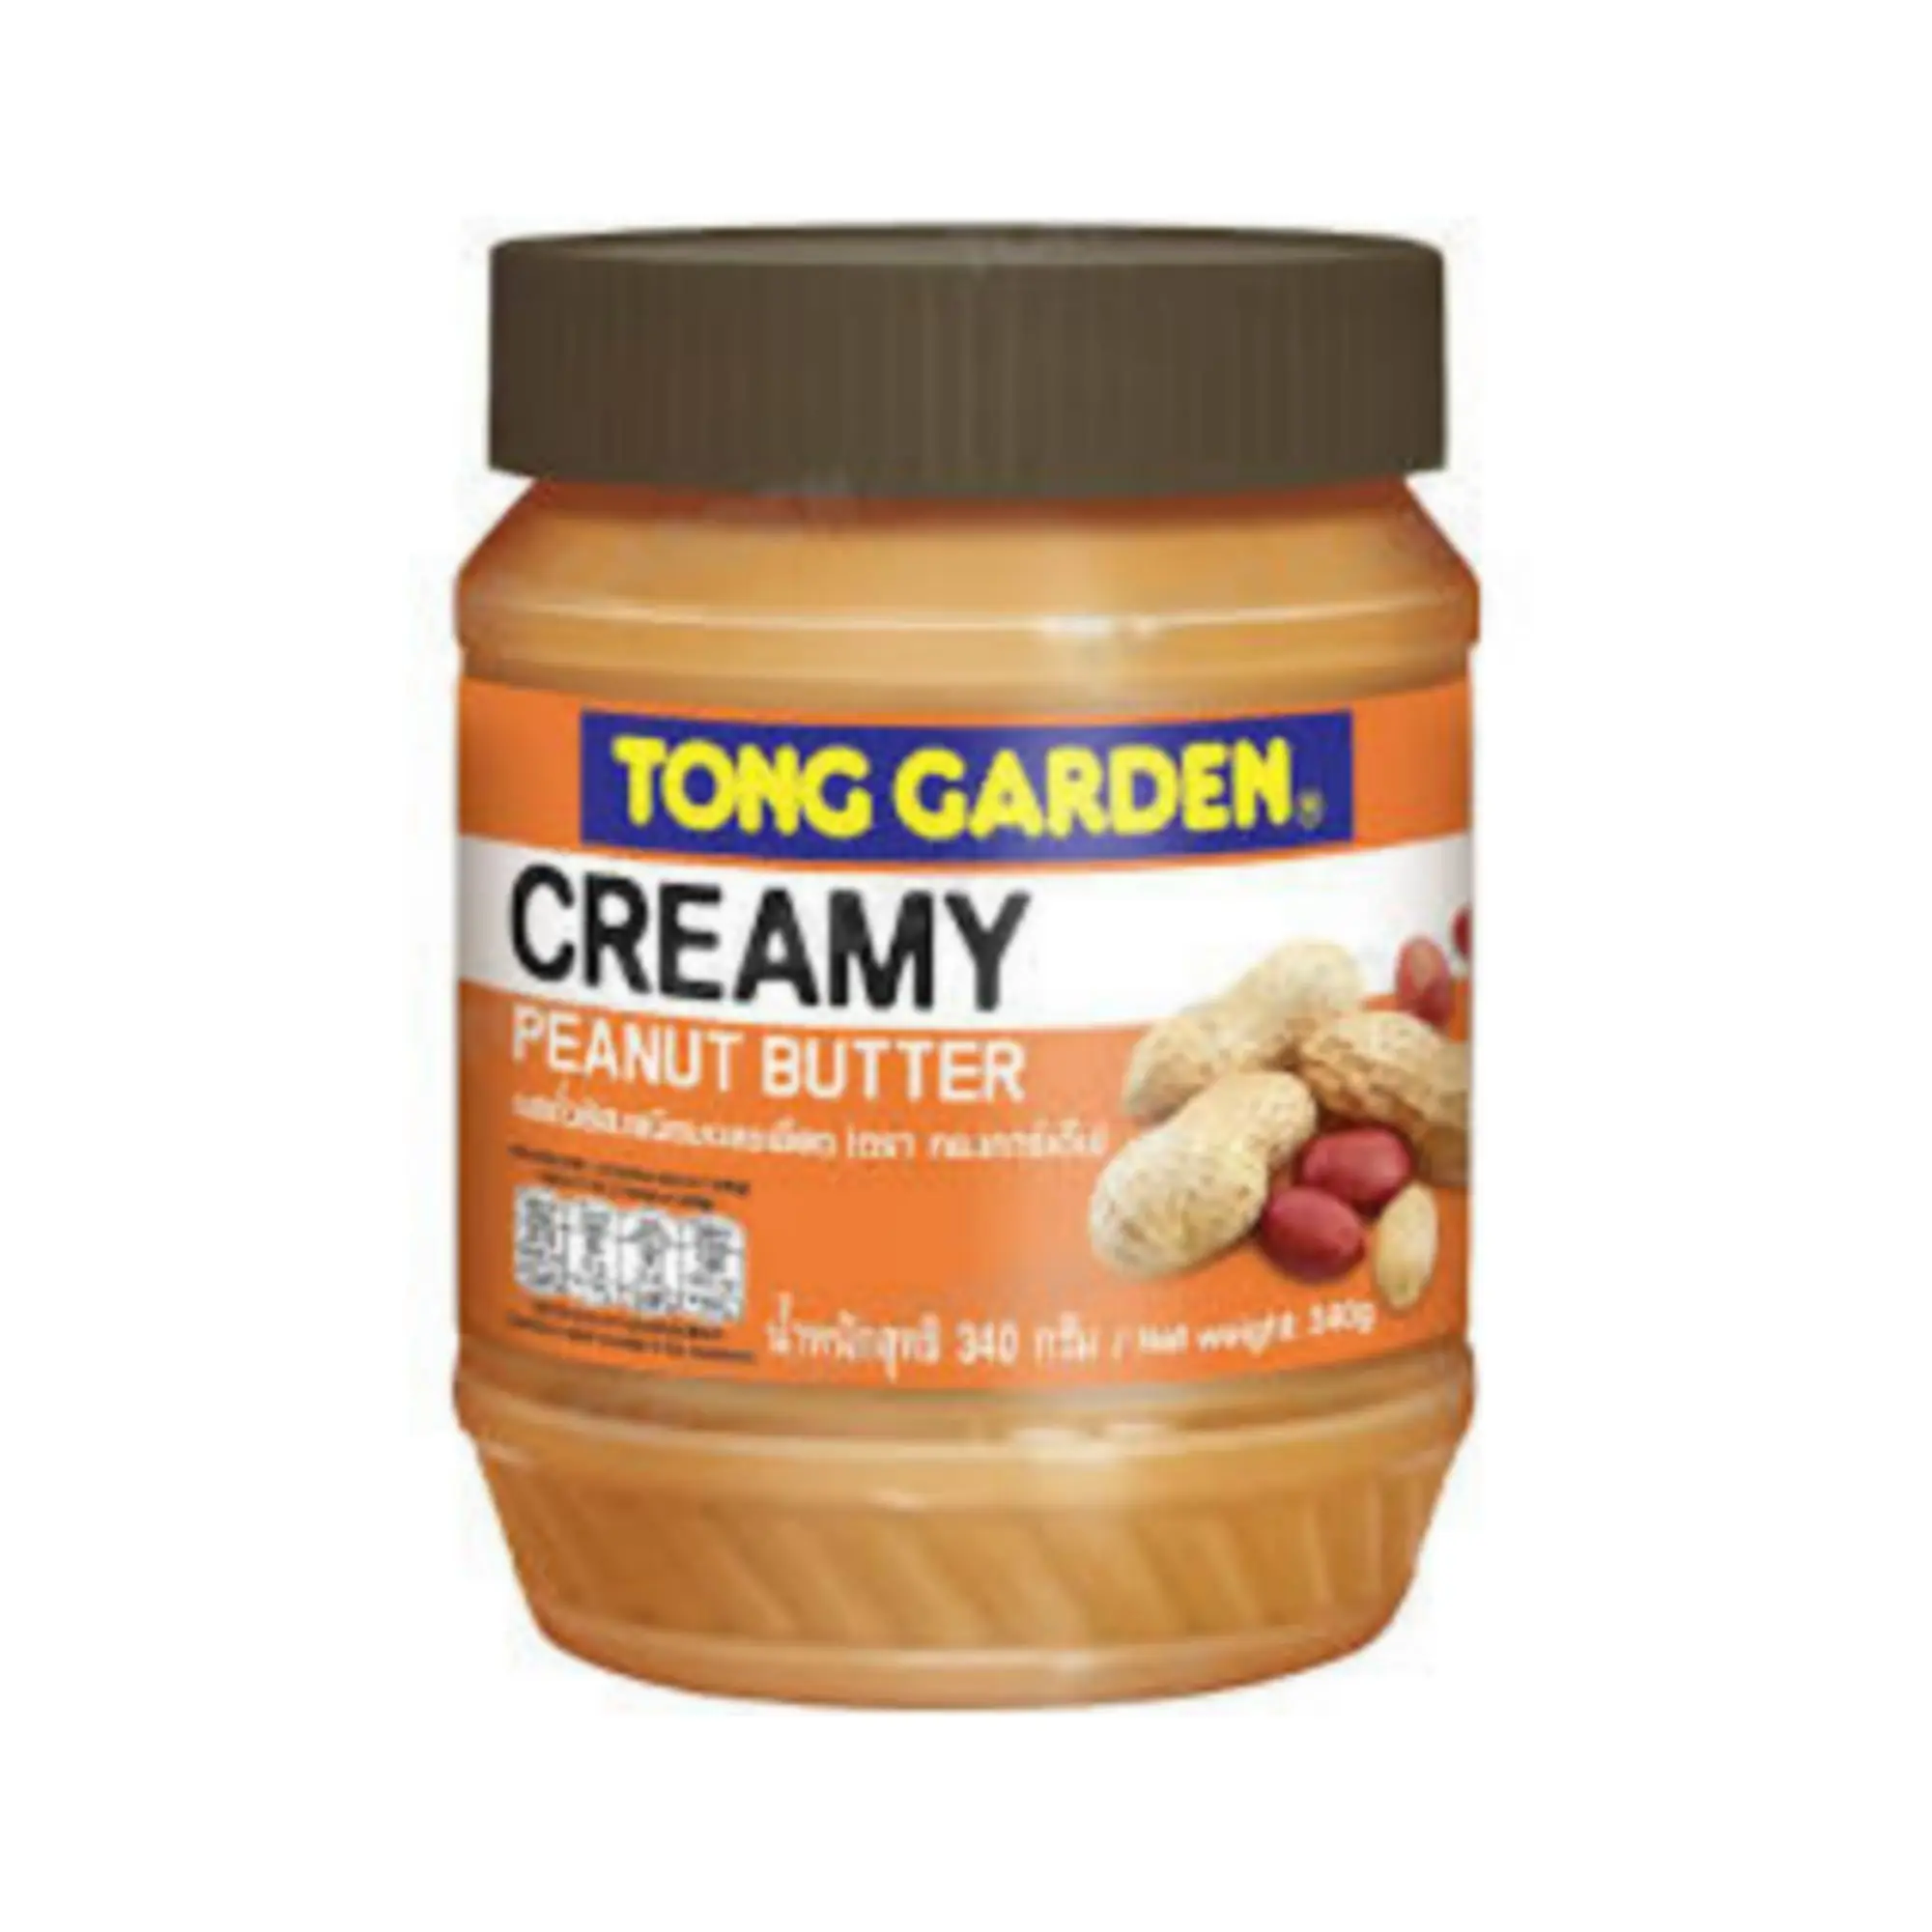 Tong Garden ทองการ์เด้นเนยถั่วบดละเอียด (Creamy Peanut Butter) 340g